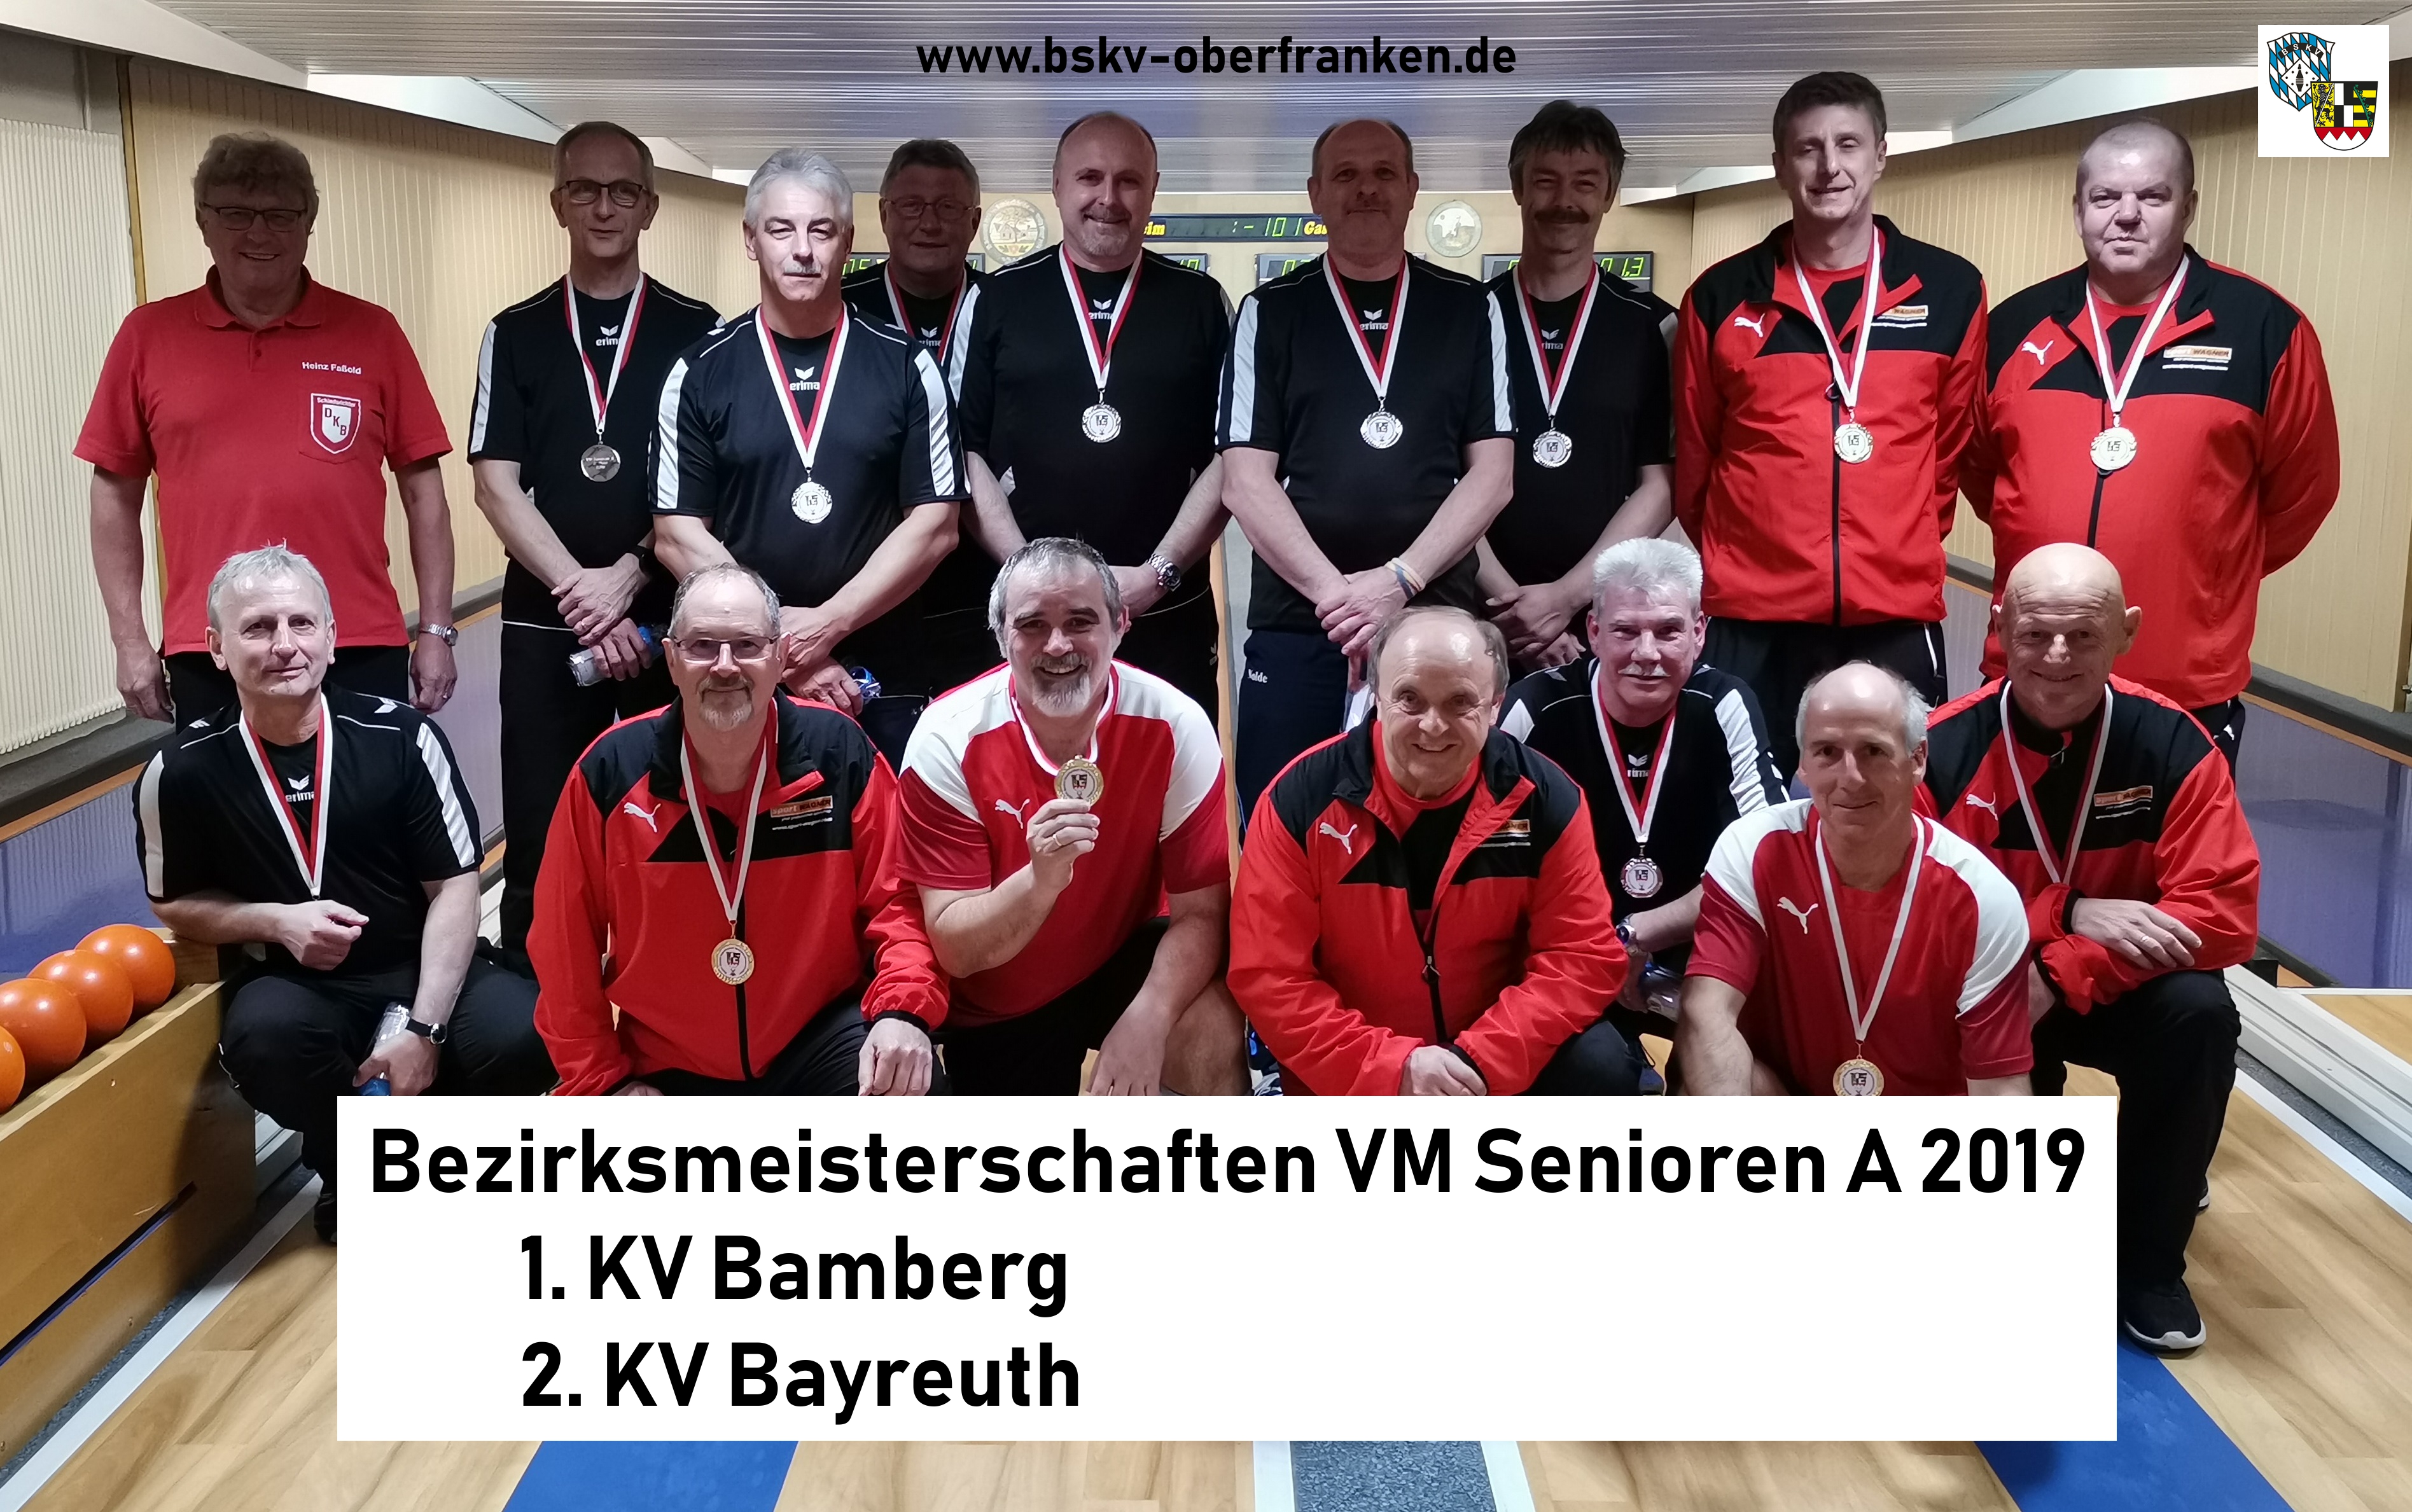 2019 BezM VM Senioren A bearbeitet